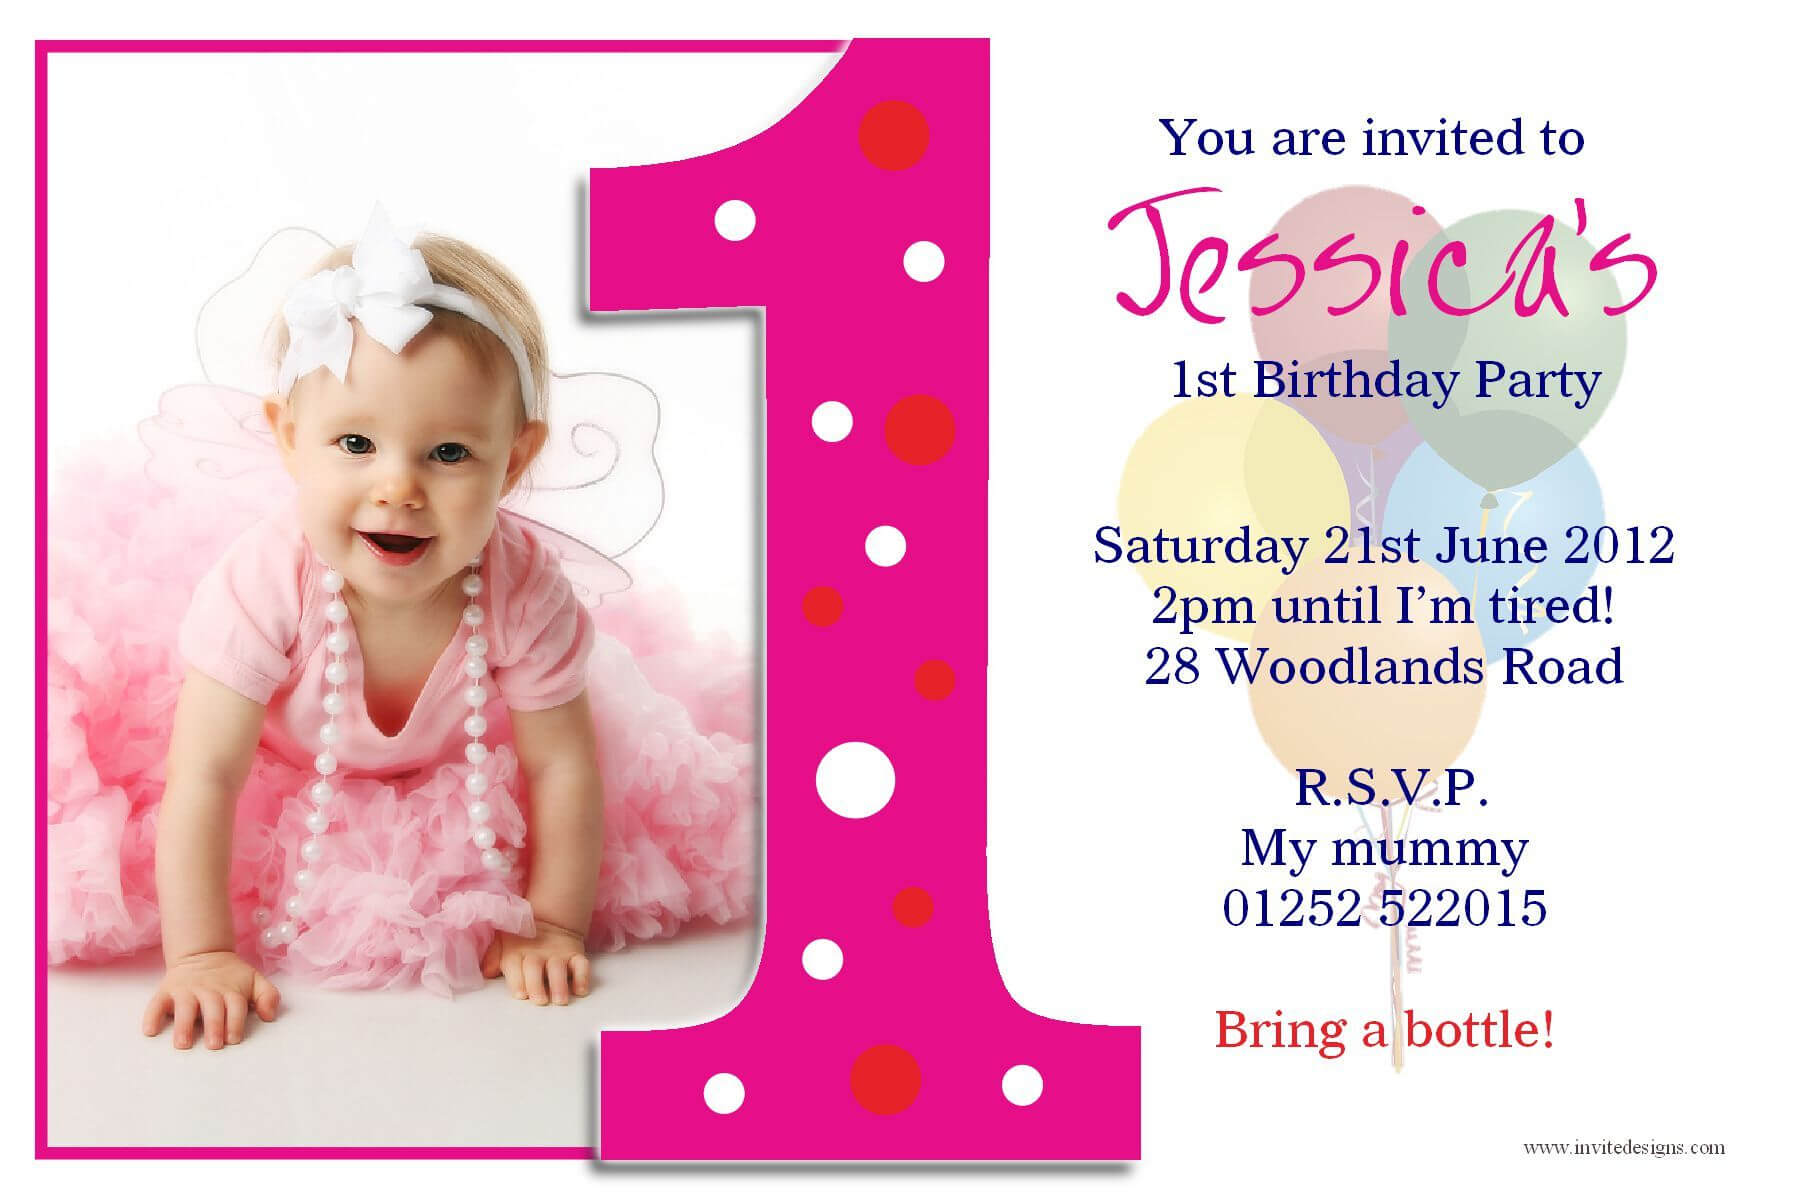 Birthday Party : First Birthday Invitations - Card With First Birthday Invitation Card Template